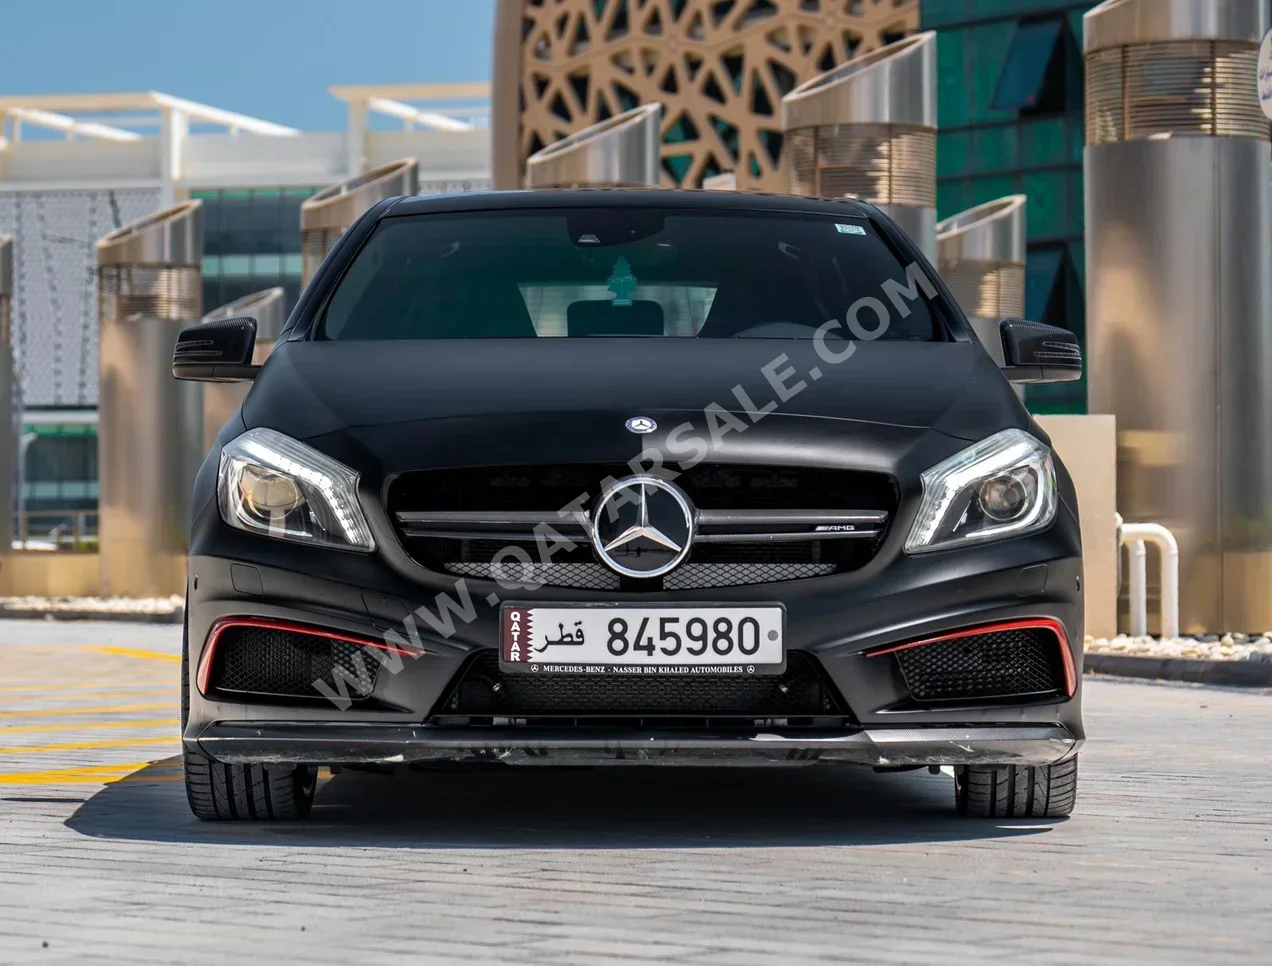 Mercedes-Benz  A-Class  45 AMG  2015  Automatic  60,000 Km  4 Cylinder  Rear Wheel Drive (RWD)  Hatchback  Black